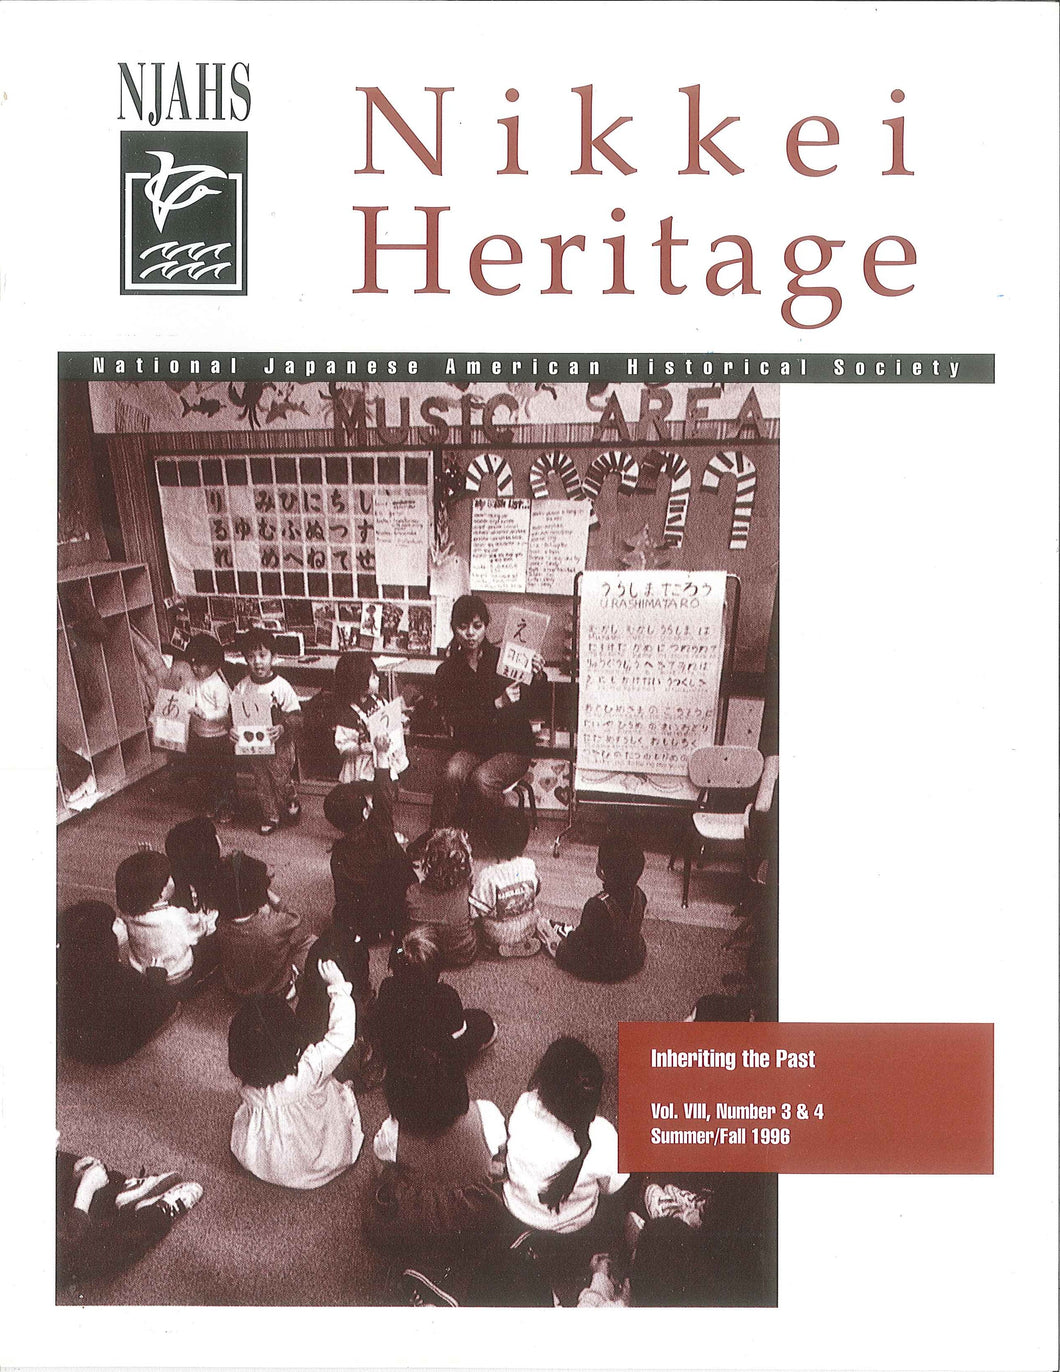 Nikkei Heritage - Inheriting the Past